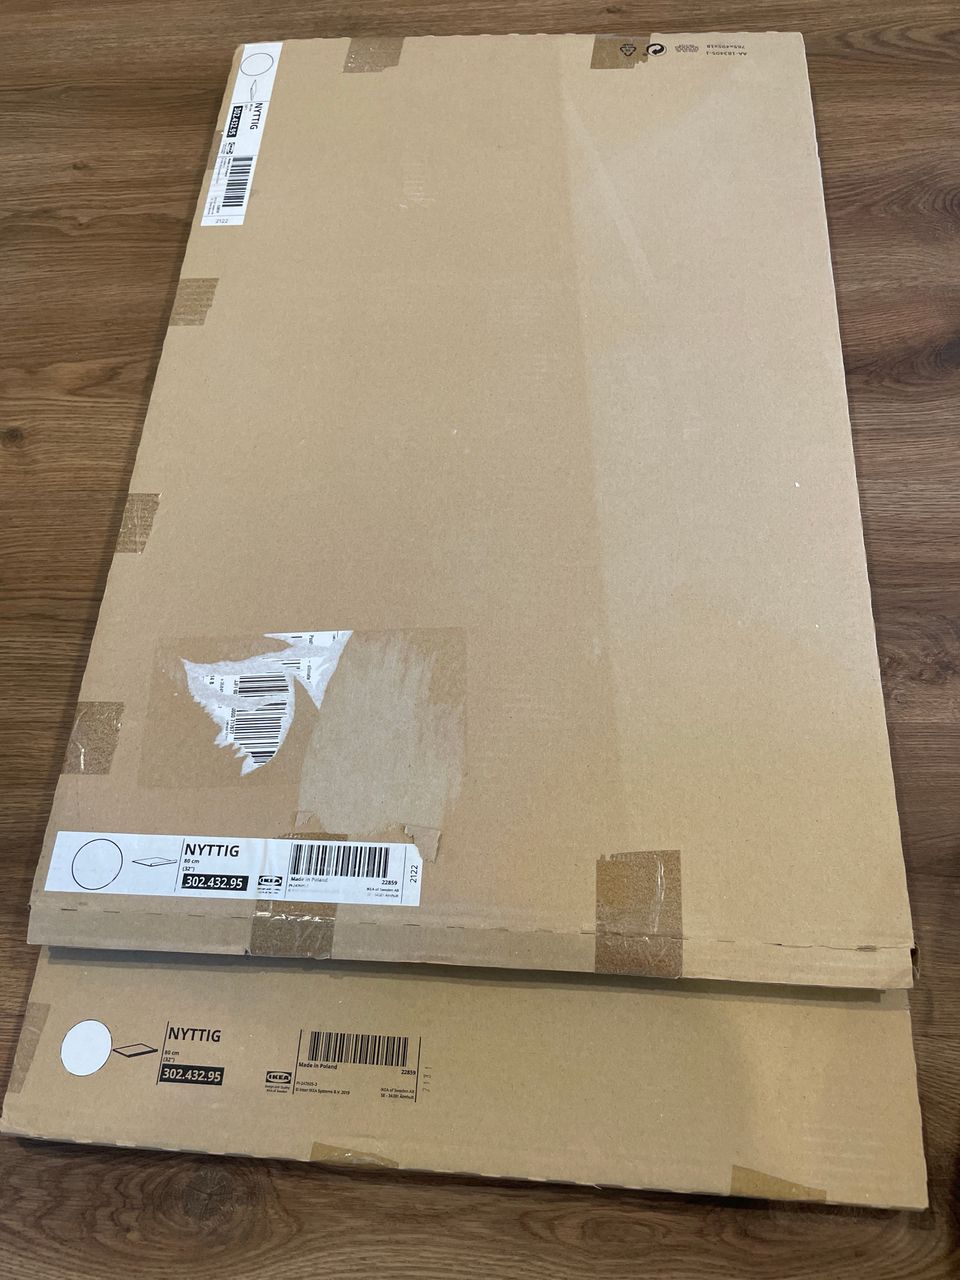 Nyttig Ikea keittotasoeriste laatikostoon 80cm